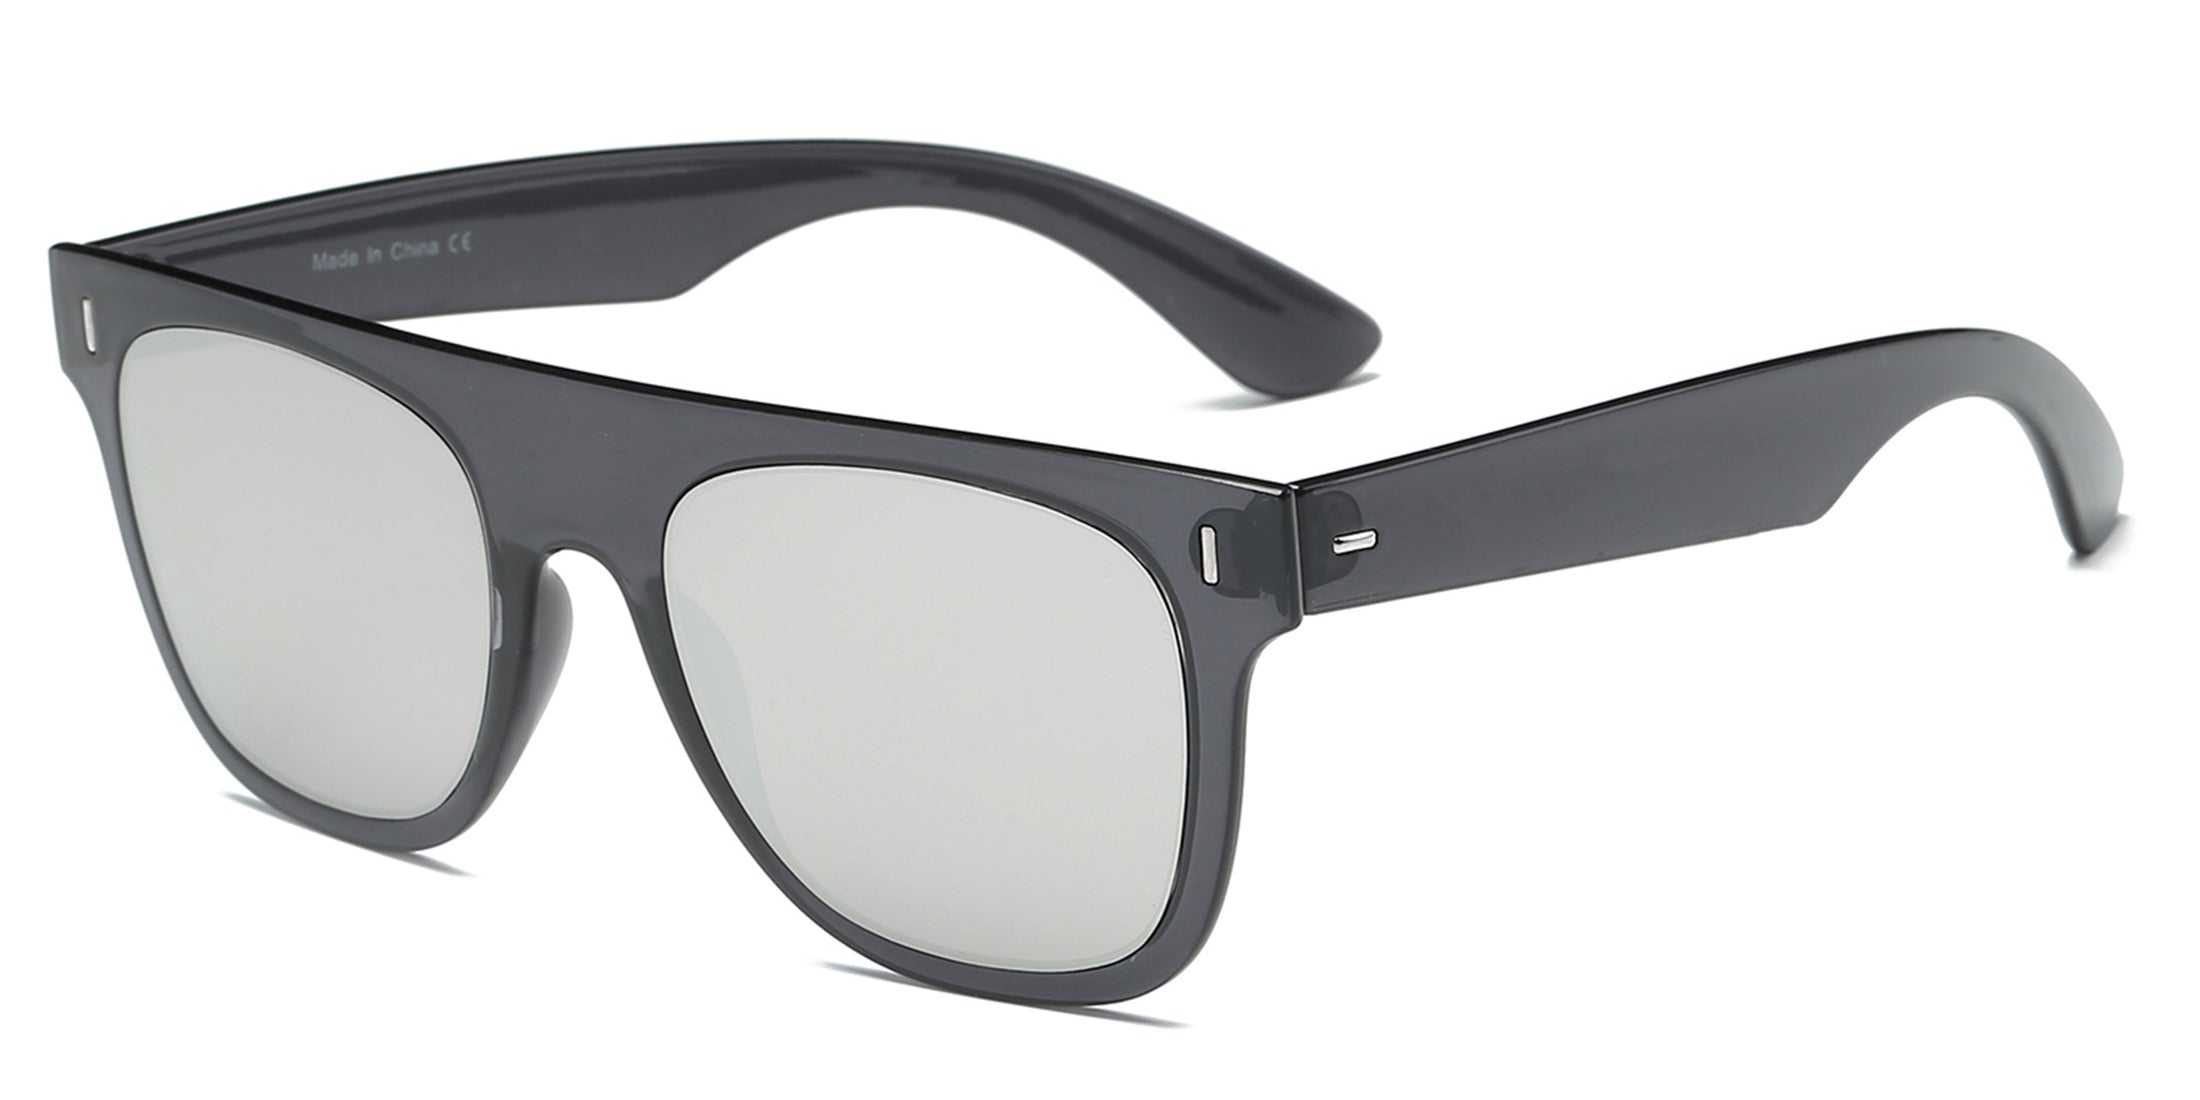 S1030 - Classic Square Mirrored Lens SUNGLASSES Black/Grey